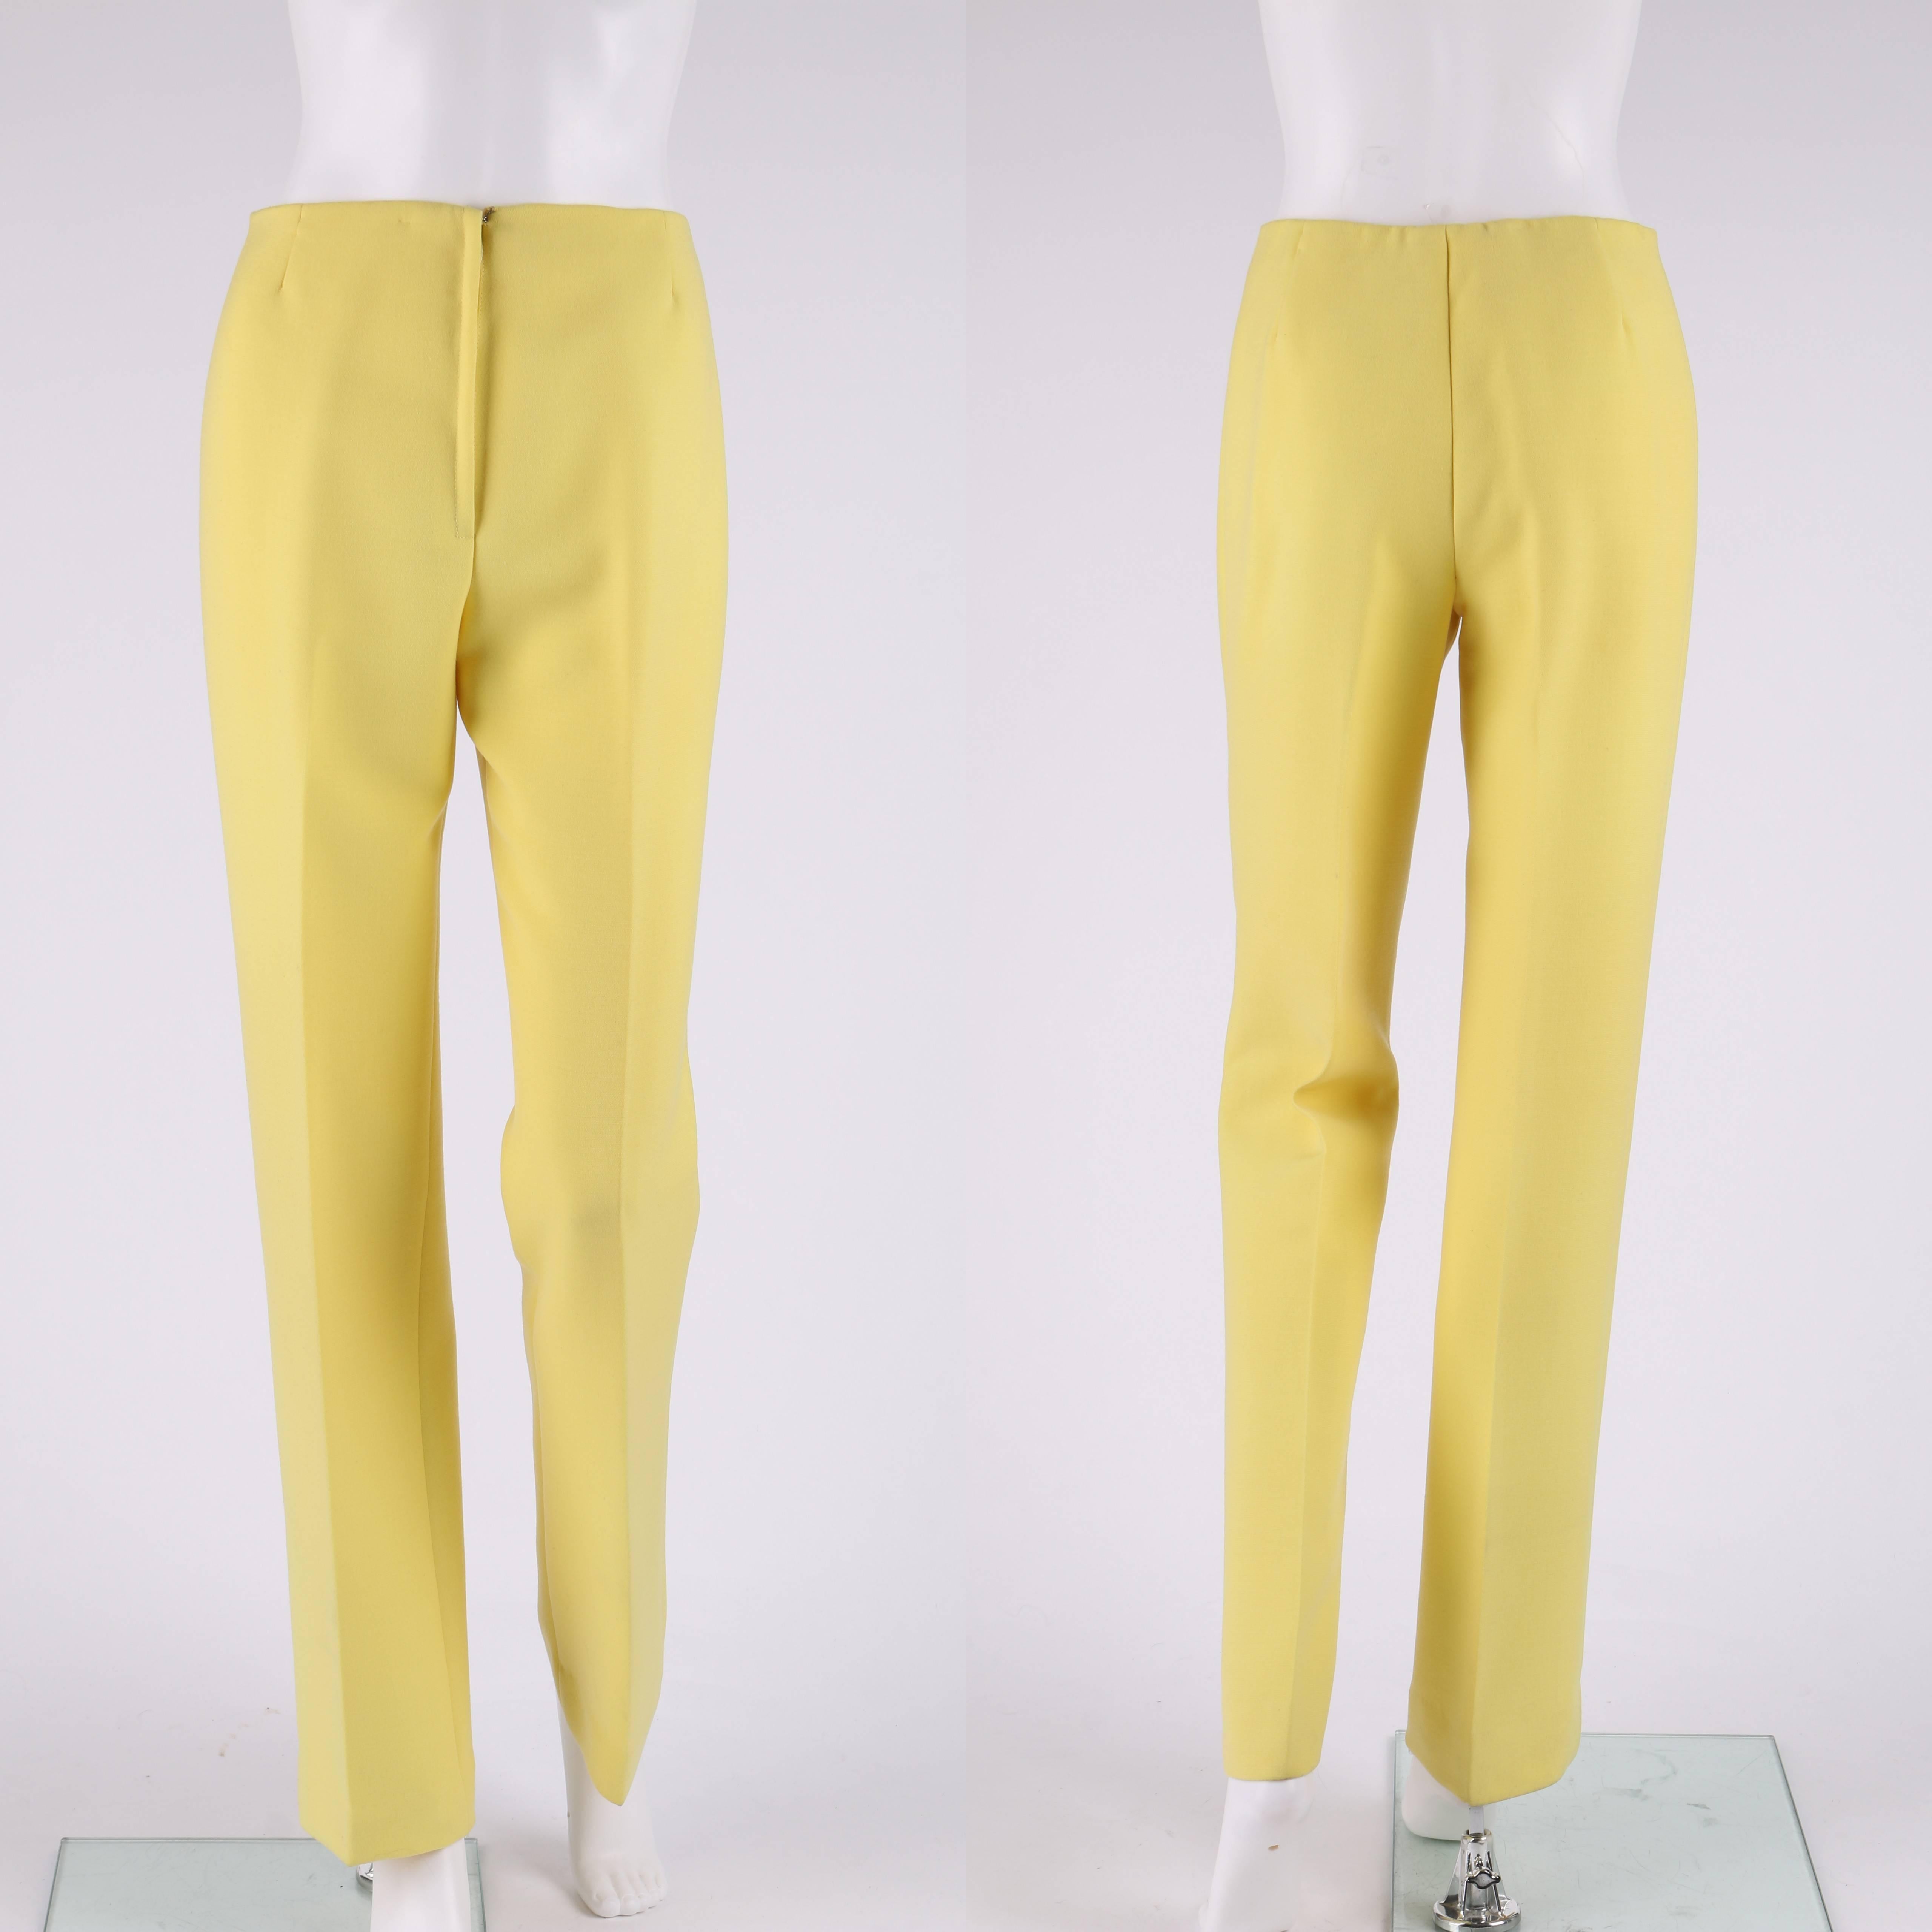 yellow pants suit